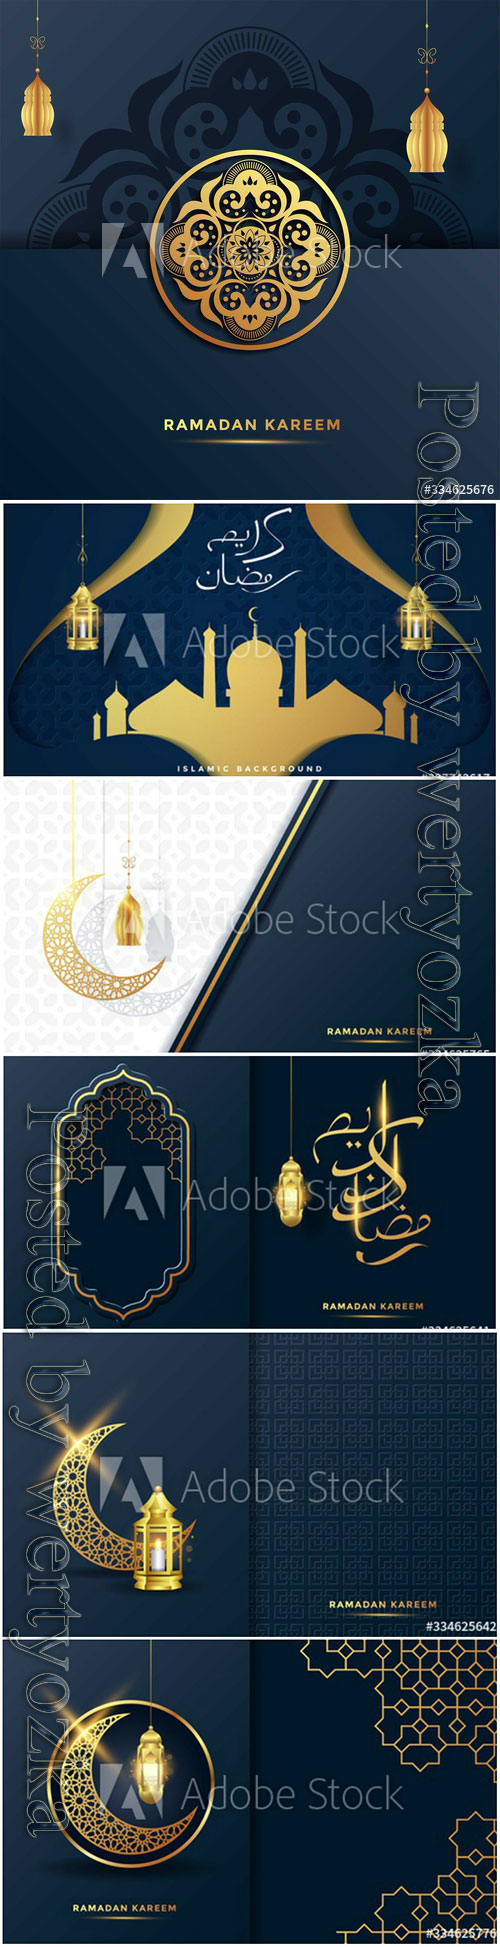 Ramadan Kareem vector background, Eid mubarak greeting card # 2